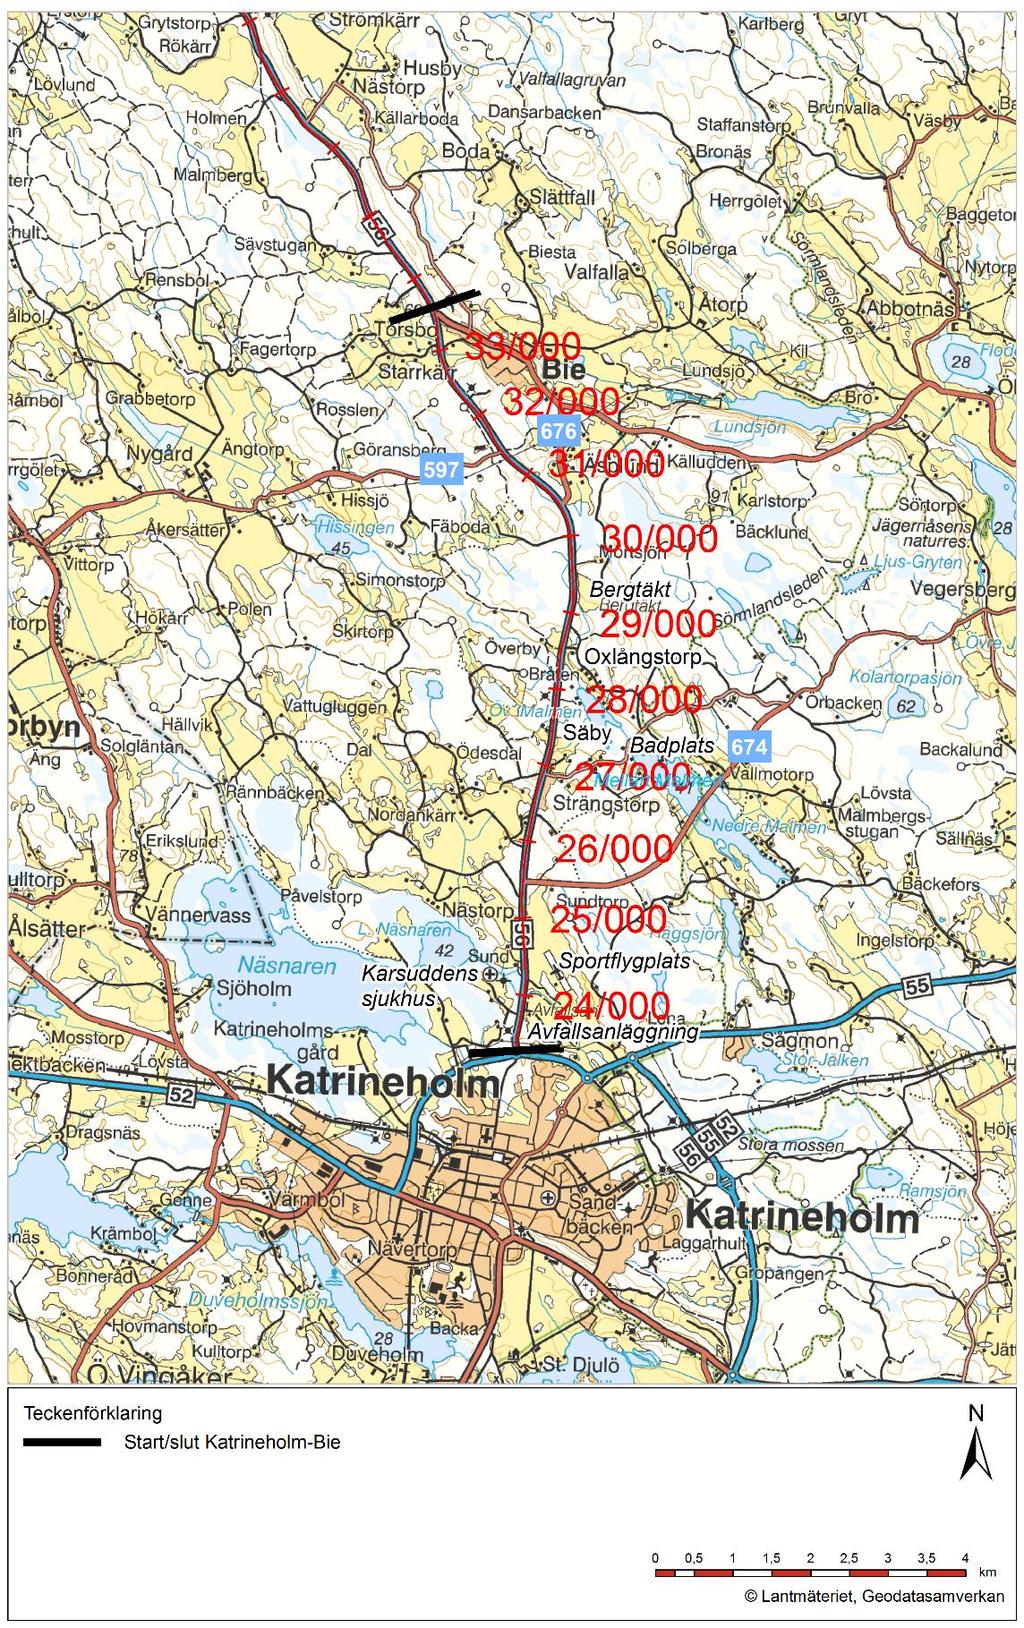 Rv 56, Katrineholm- Bie, VO1803 Infoga diagram, figur eller bild här 1.